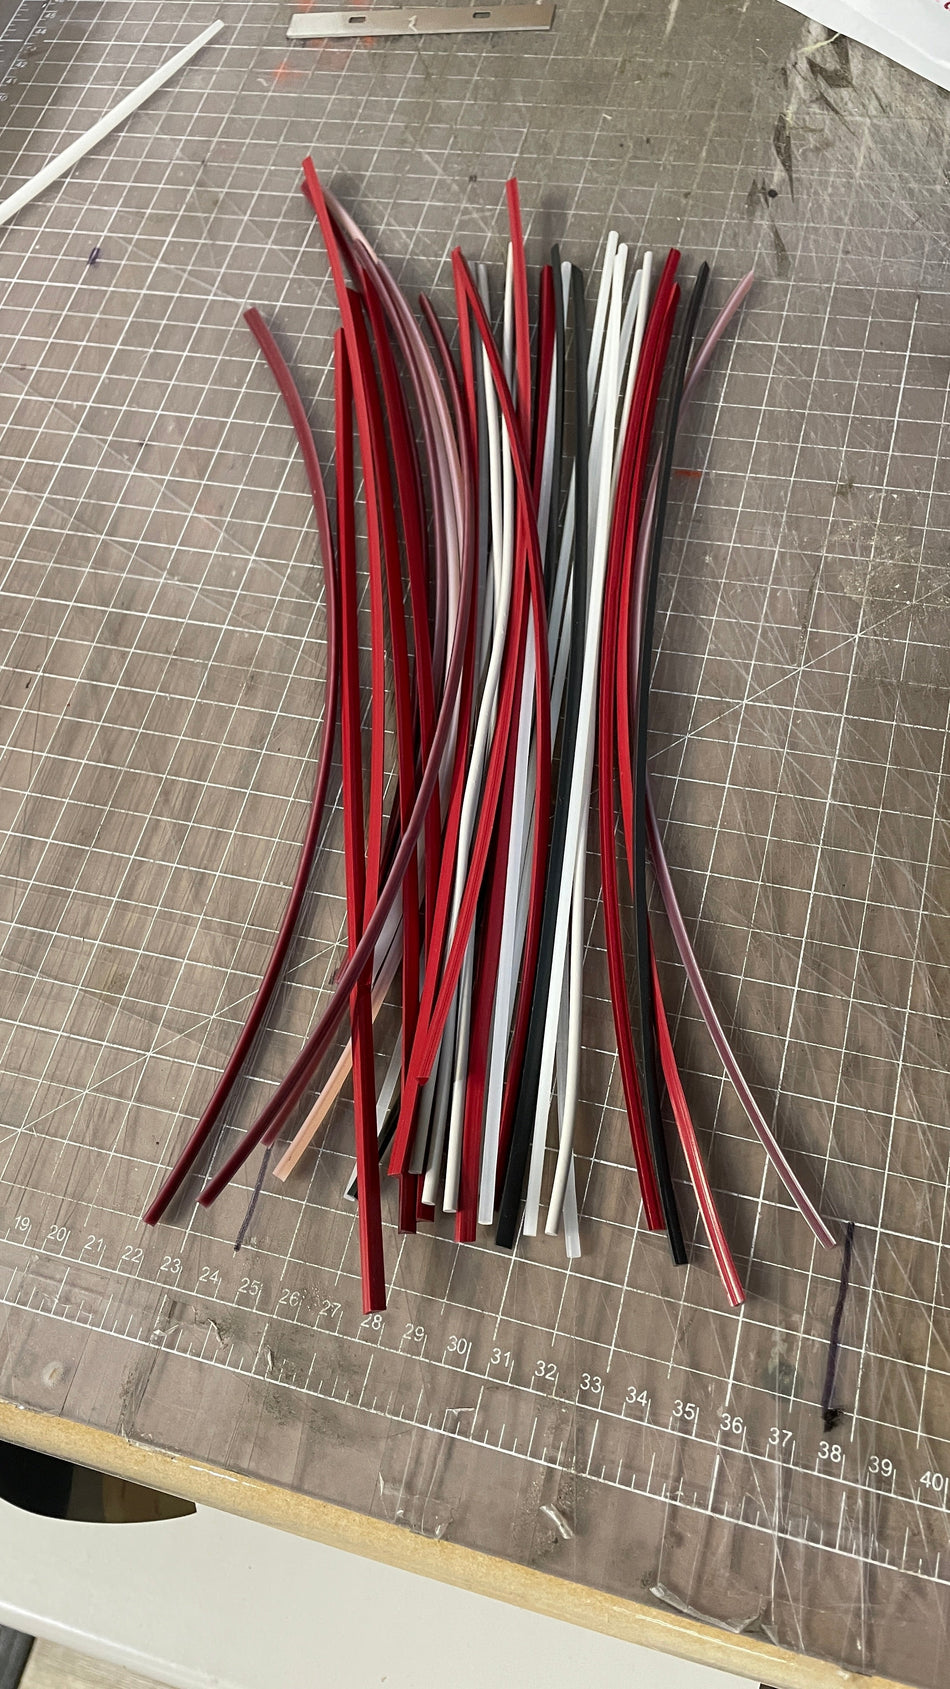 PVC Off-Shape/Off Color - Pure Virgin PVC Plastic Welding Rods, Coils & Reels (aka. Oops runs, startup & configuration runs)